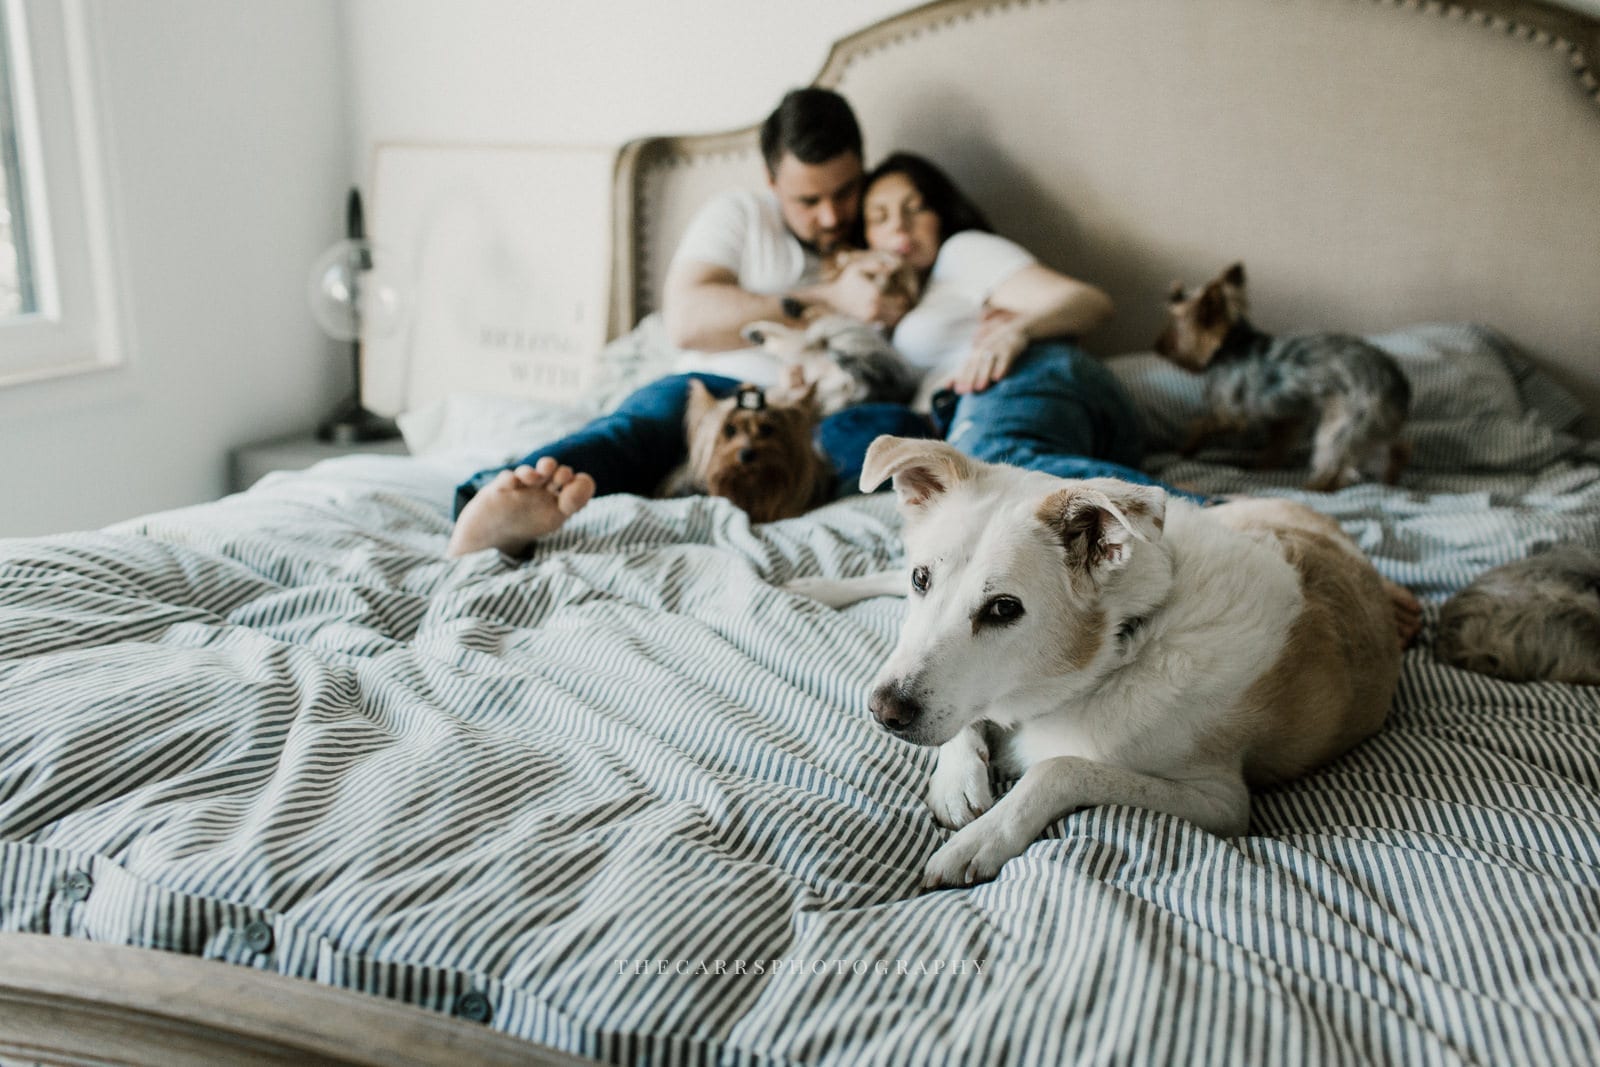 husband and wife laying on bed with dog - dayton ohio maternity photographer